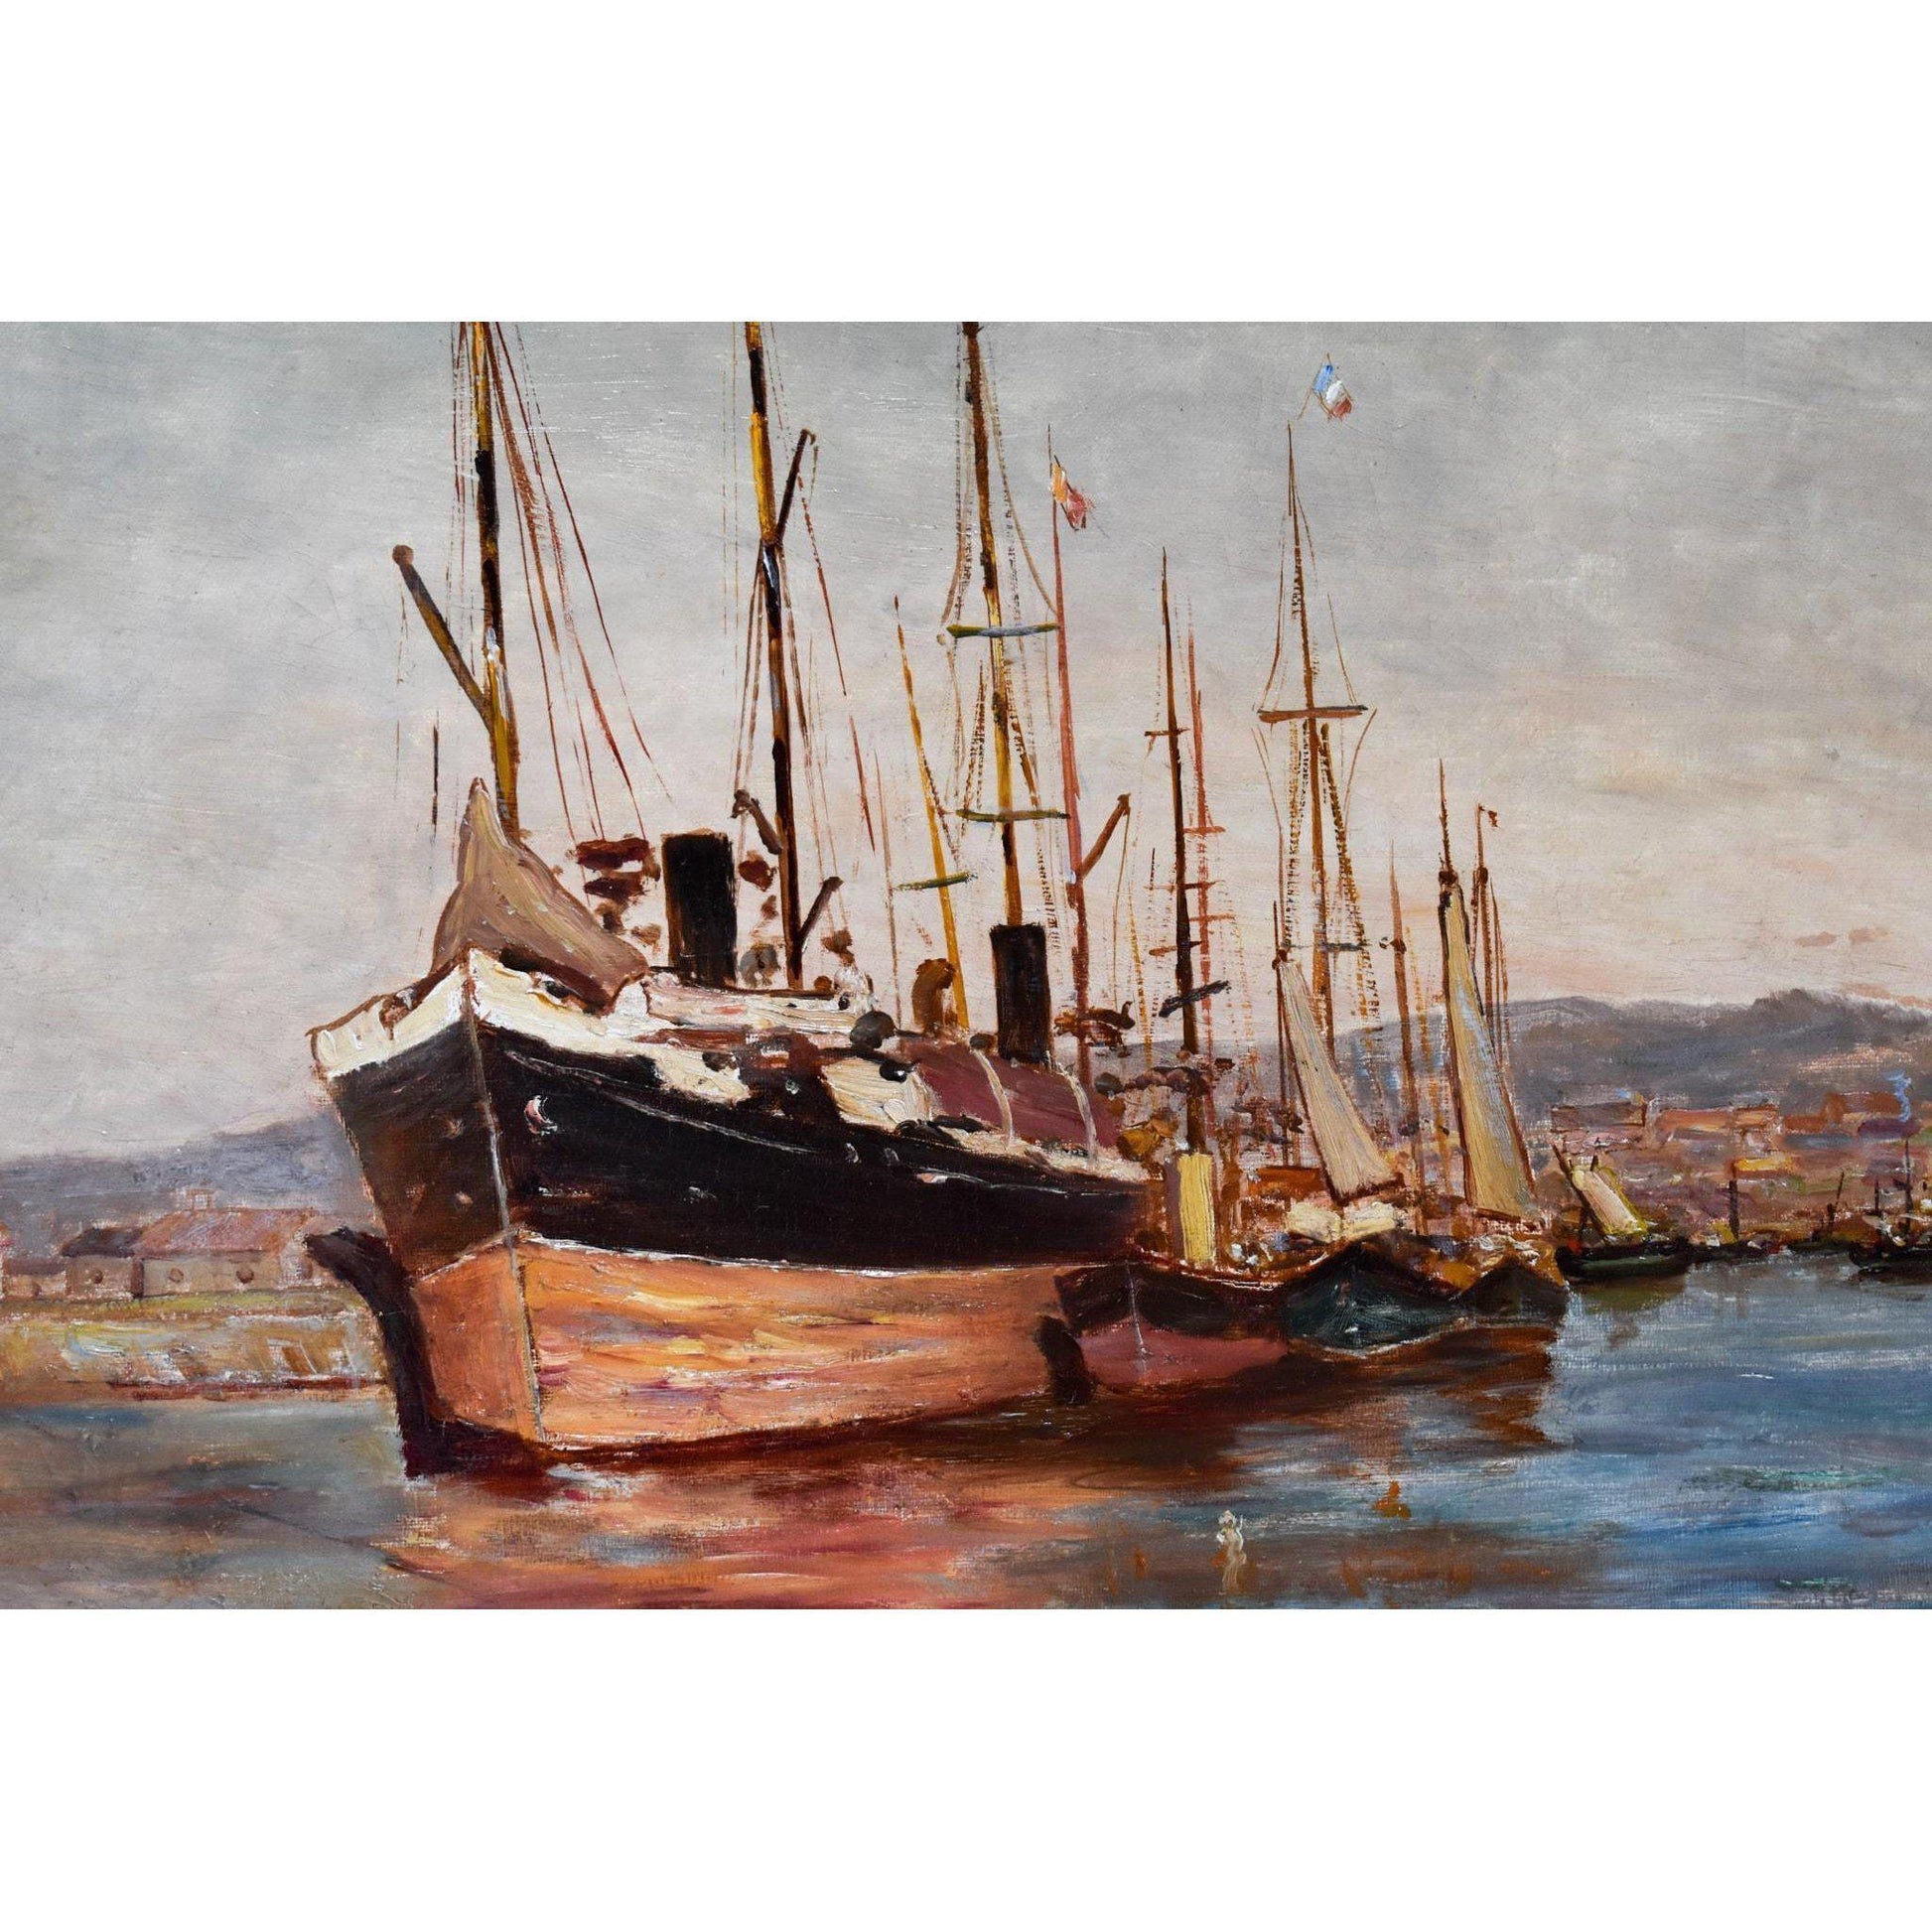 Antique seascape oil painting boats port scene circa 1900 by Jean Louis Verdie for sale at Winckelmann Gallery